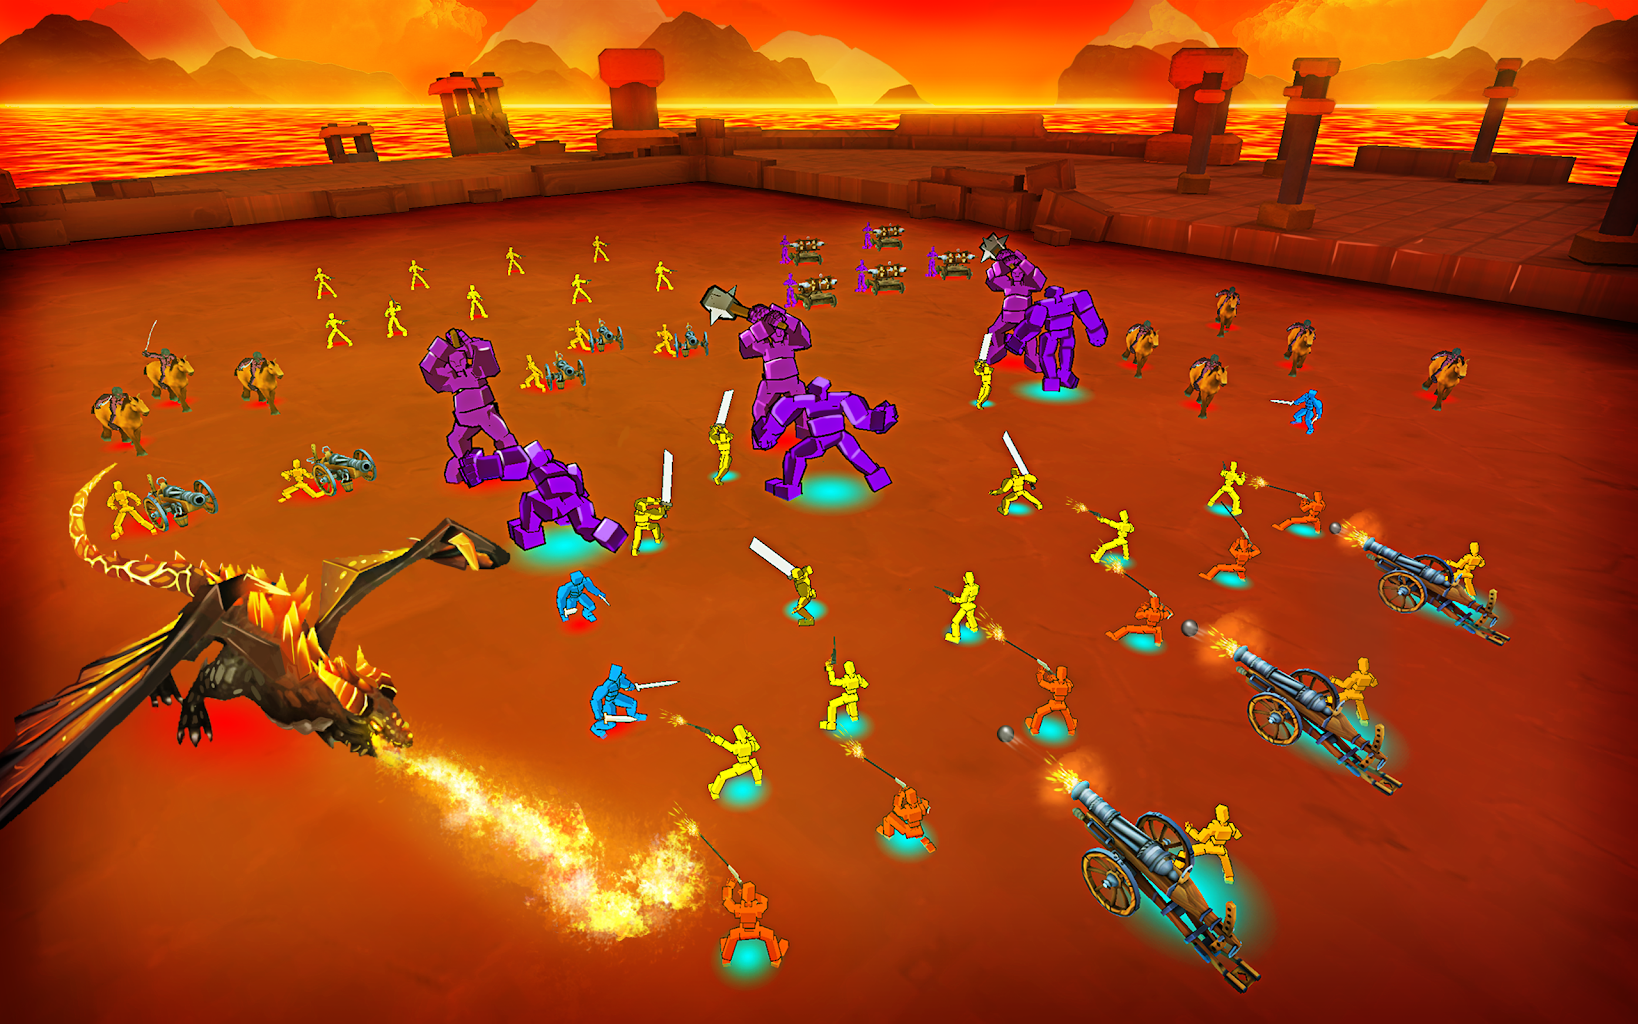 download ultimate epic battle simulator free